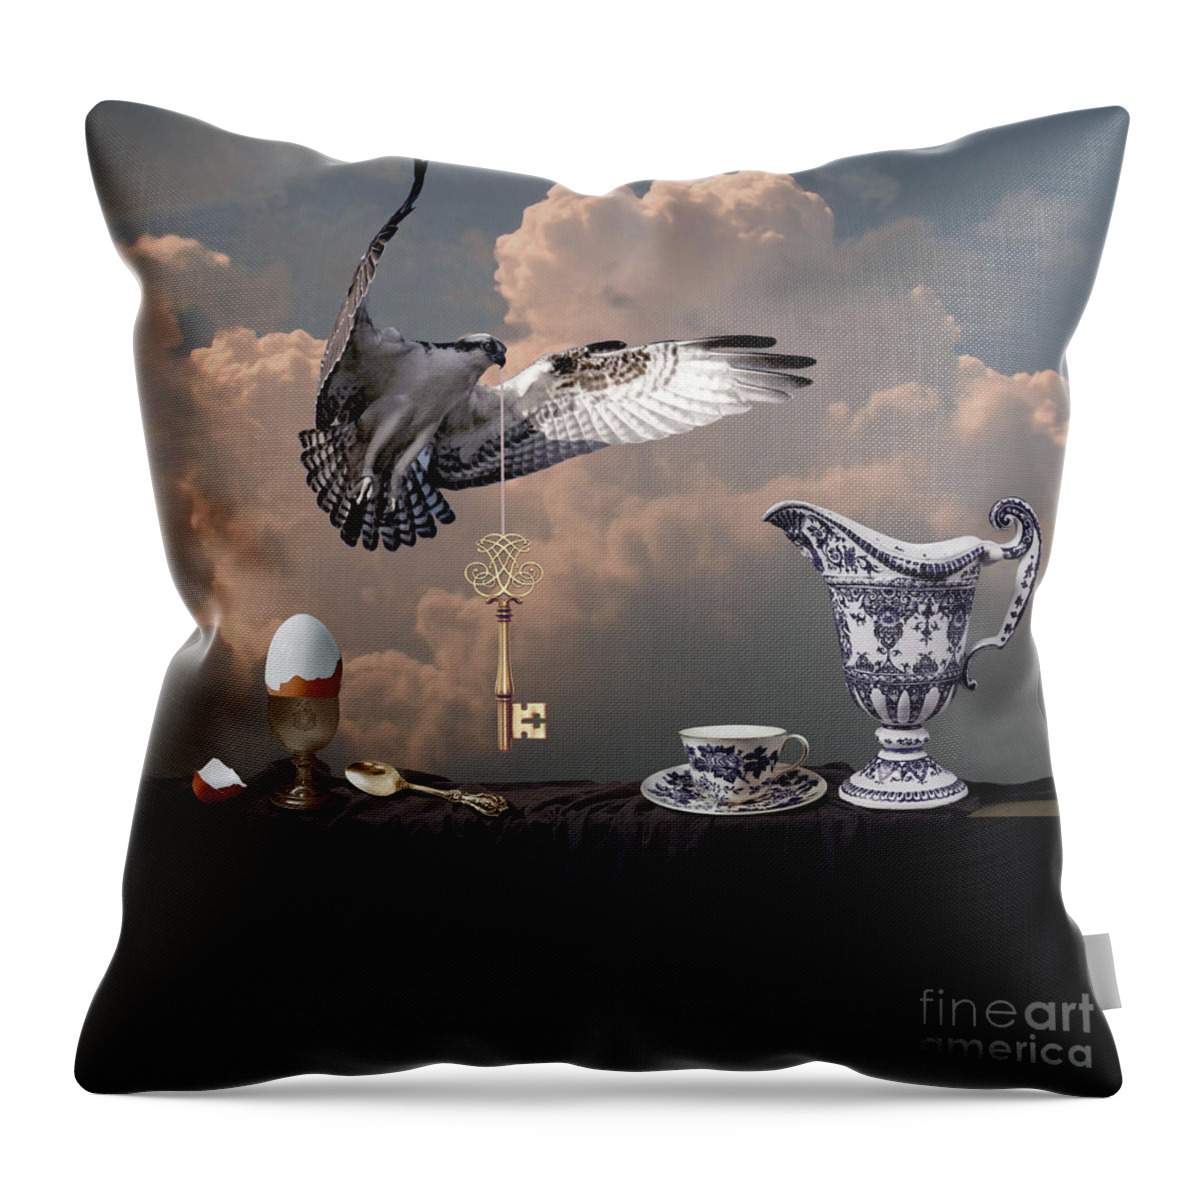 Falcon Throw Pillow featuring the digital art Breakfast with falcon by Alexa Szlavics